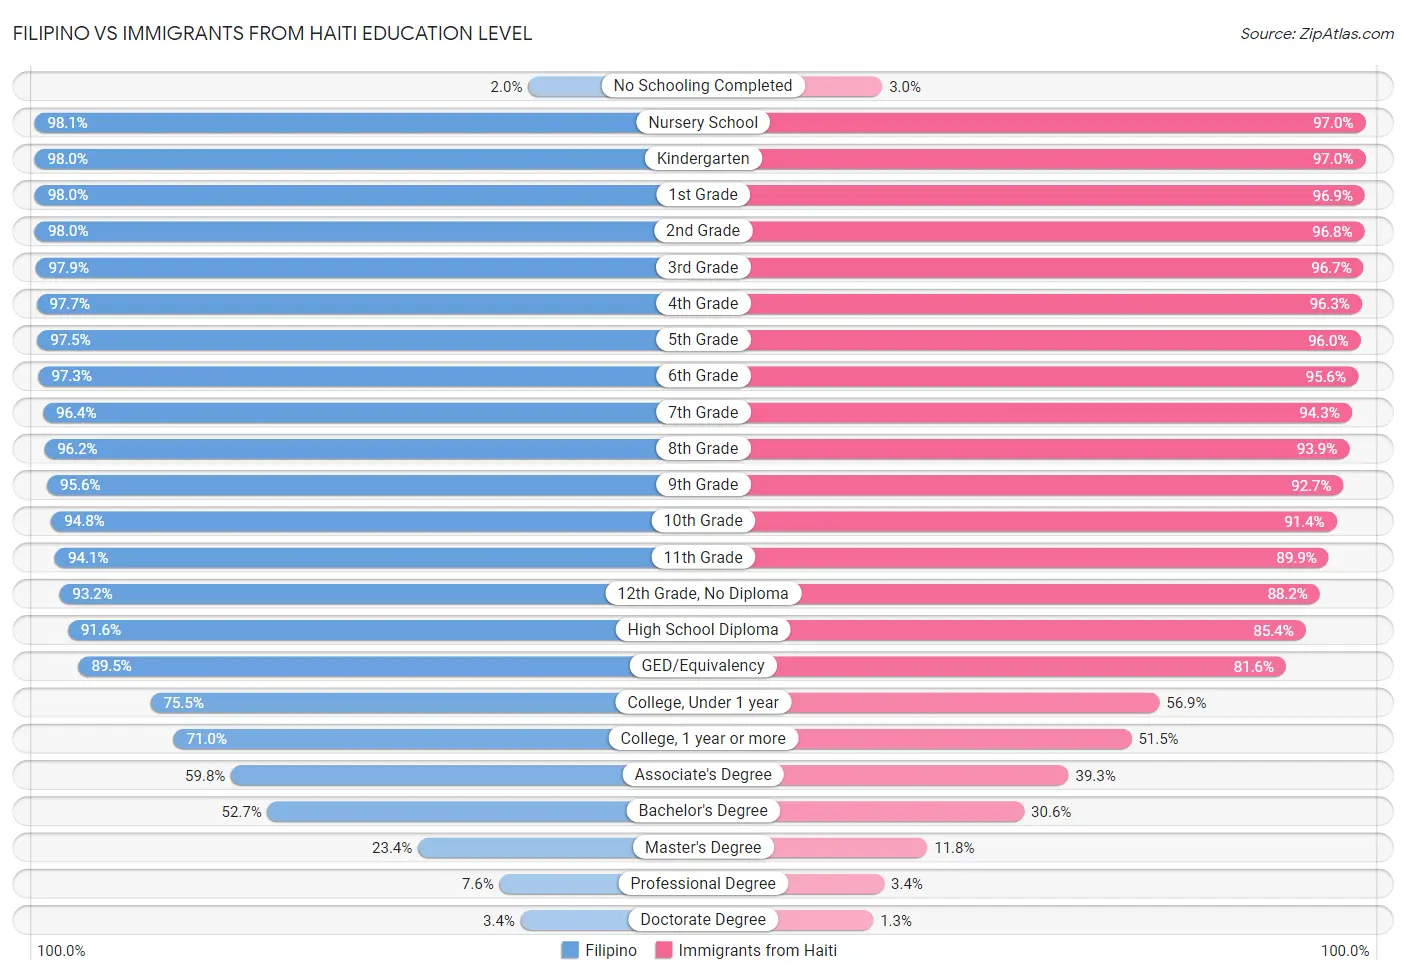 Filipino vs Immigrants from Haiti Education Level